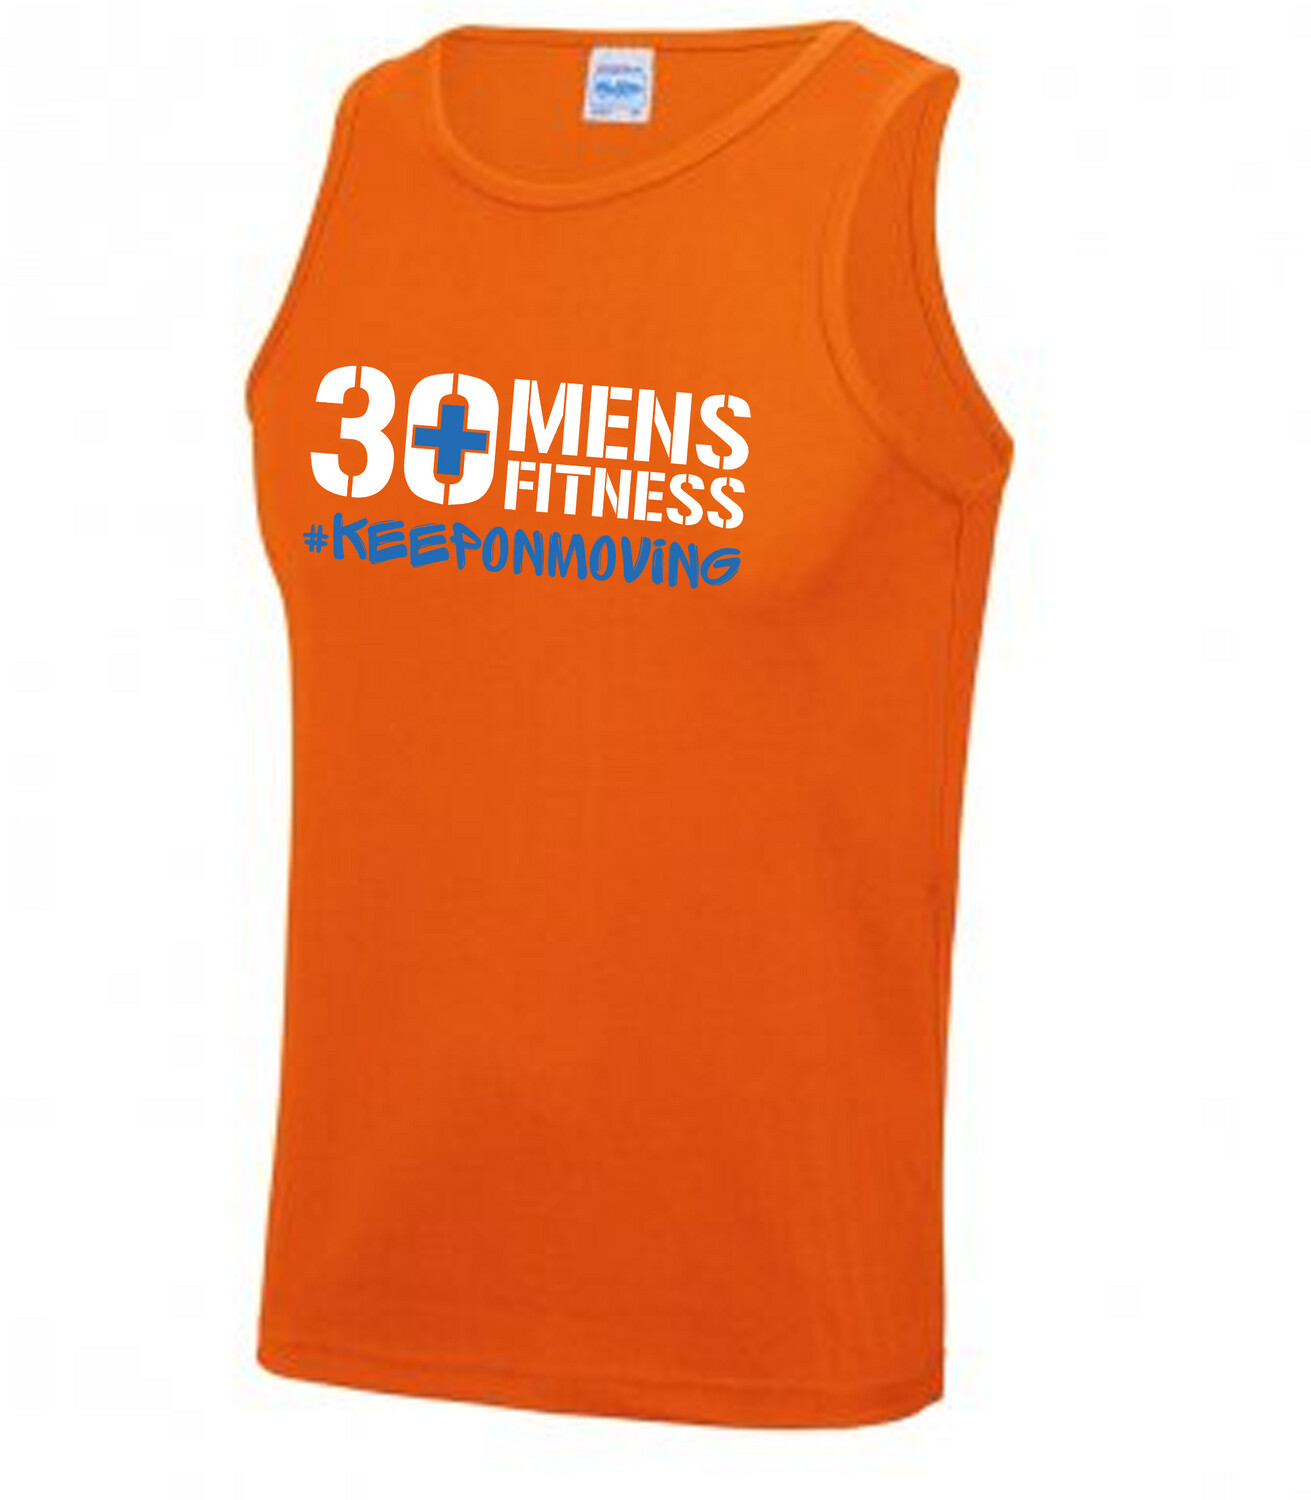 30+ Mens Fitness Training Vest keep on moving